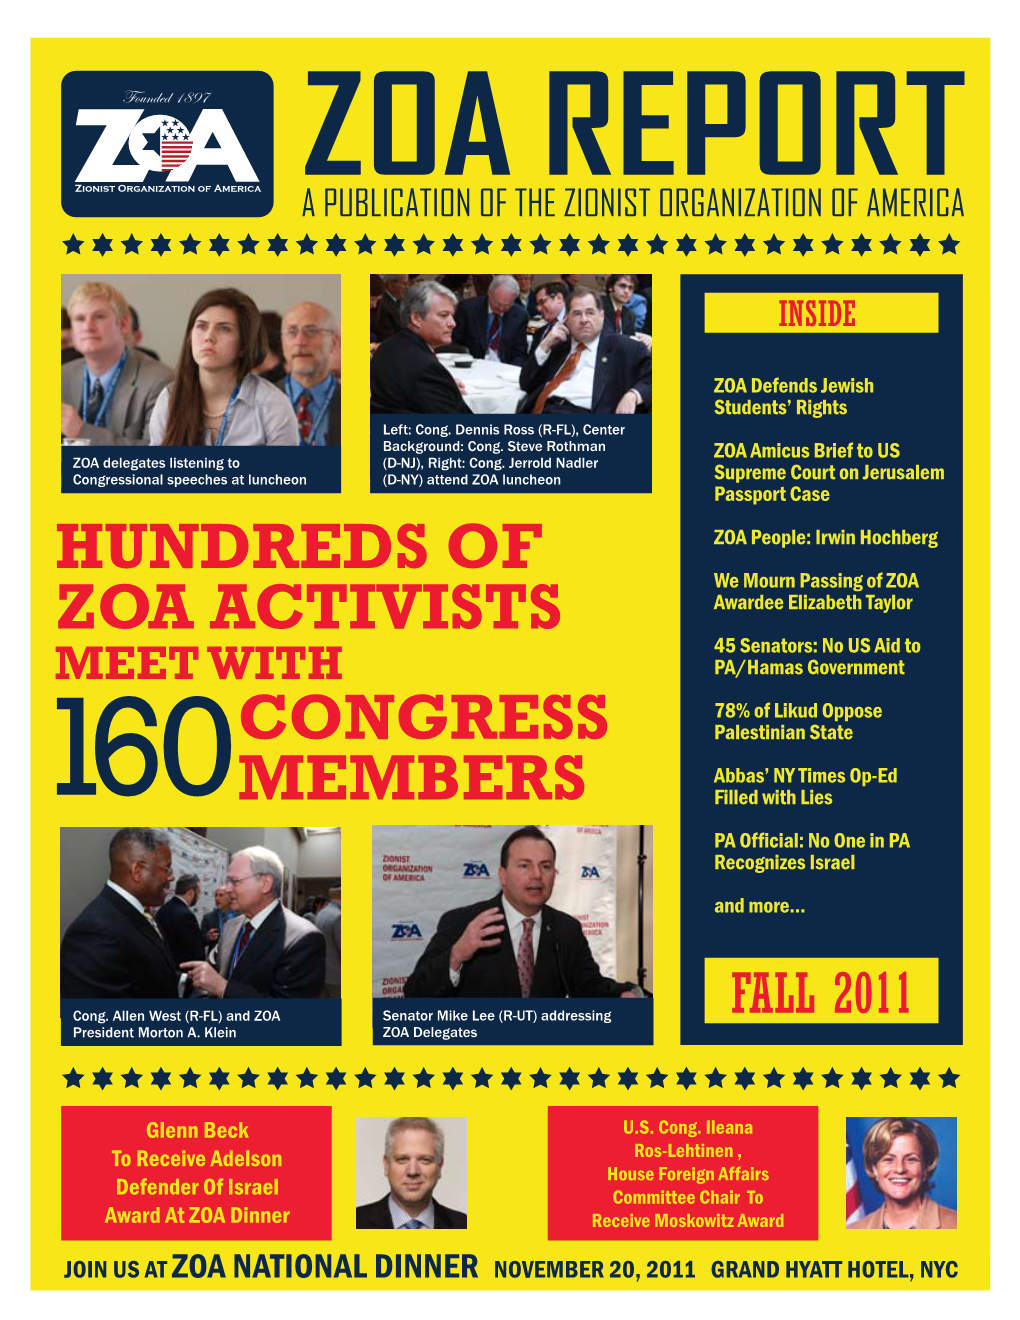 Congress Members Hundreds of Zoa Activists